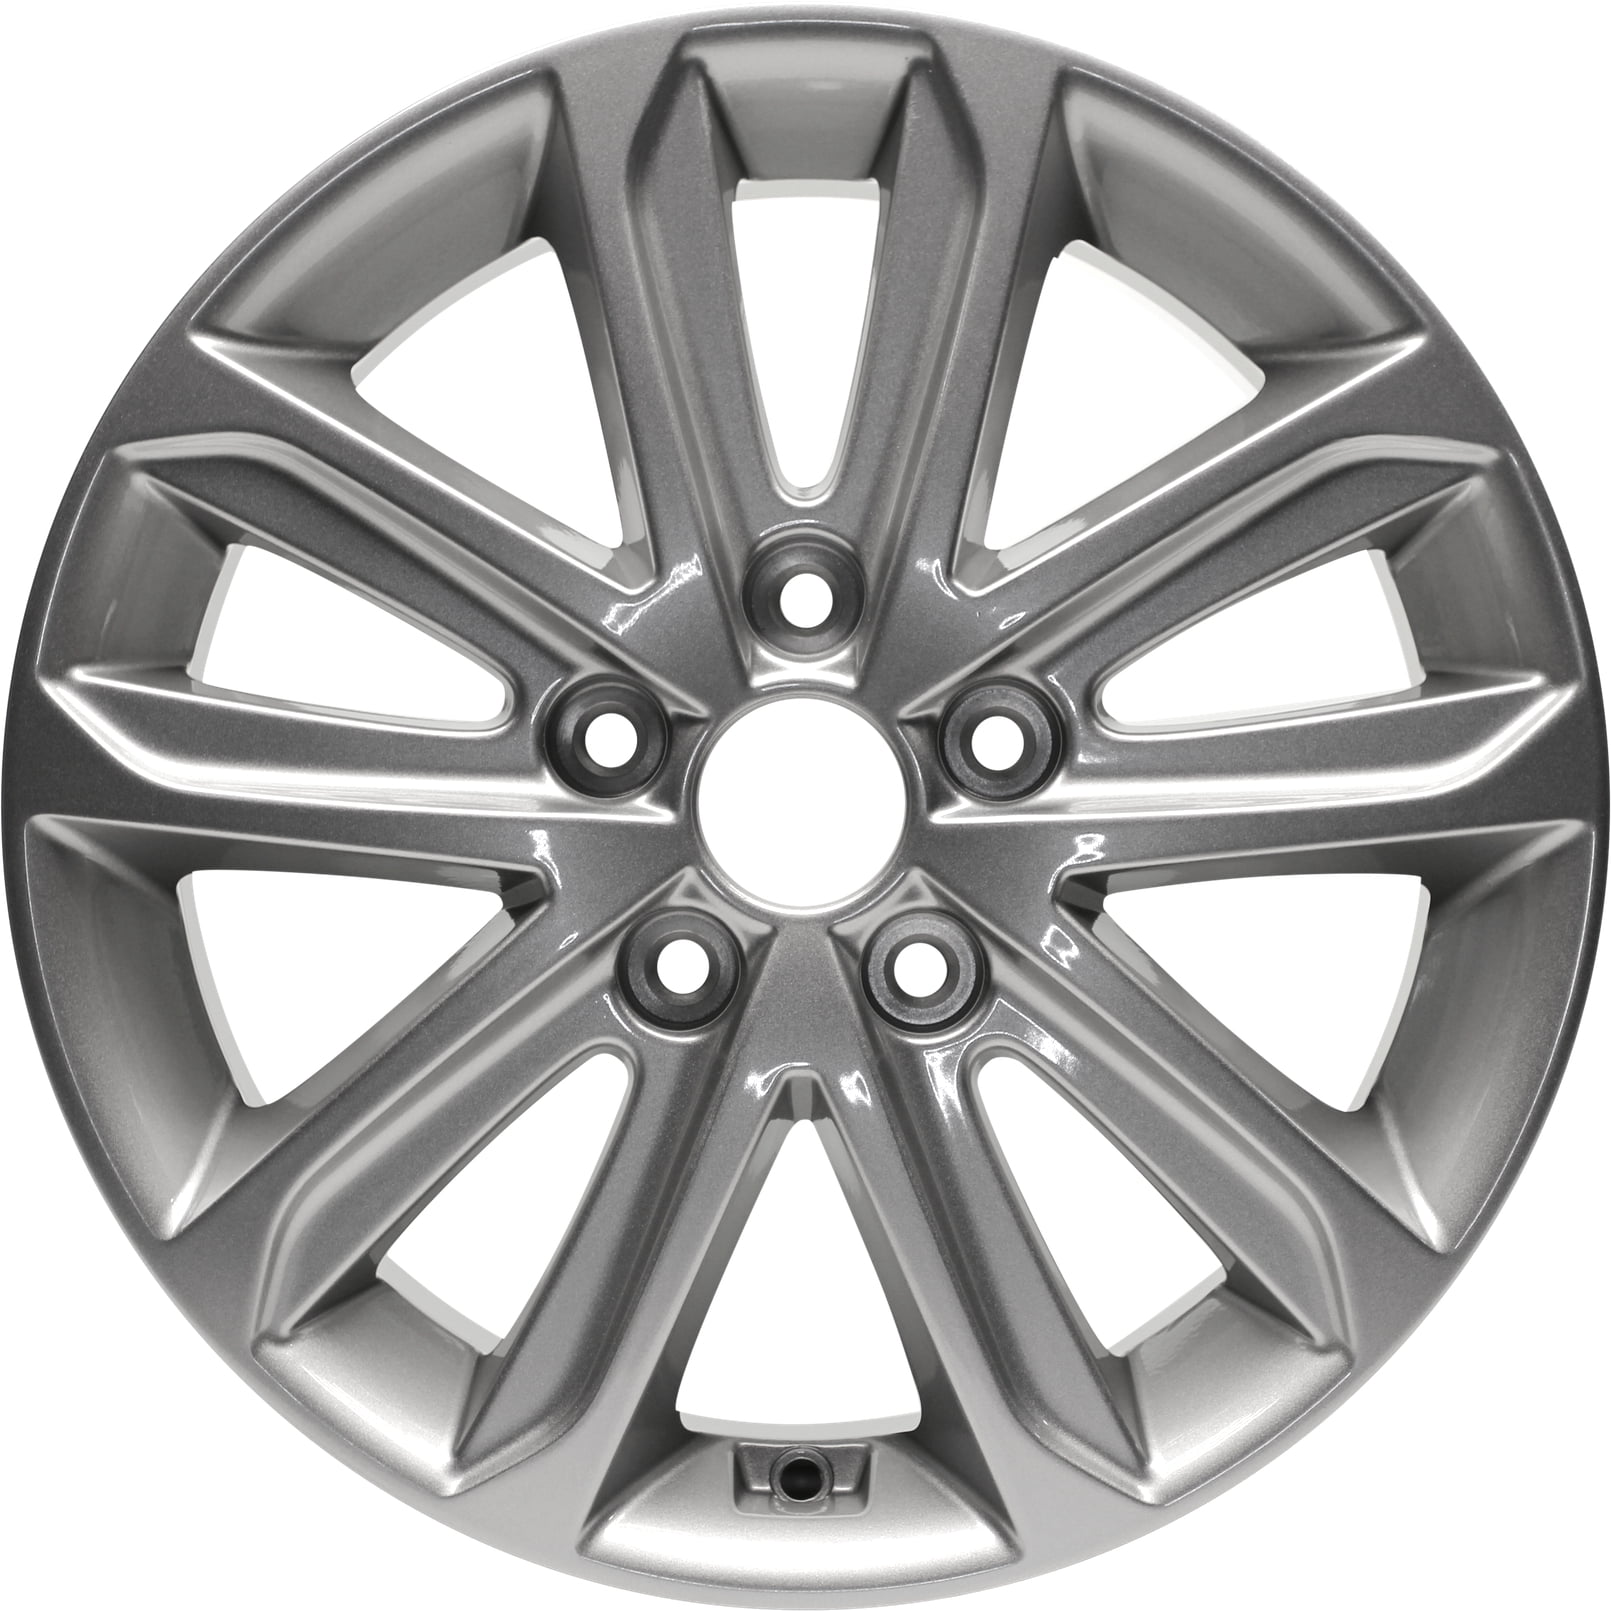 Aluminum Alloy Wheel Rim 17 Inch Fits 14-16 Hyundai Elantra 5-114.3mm 10 Spokes